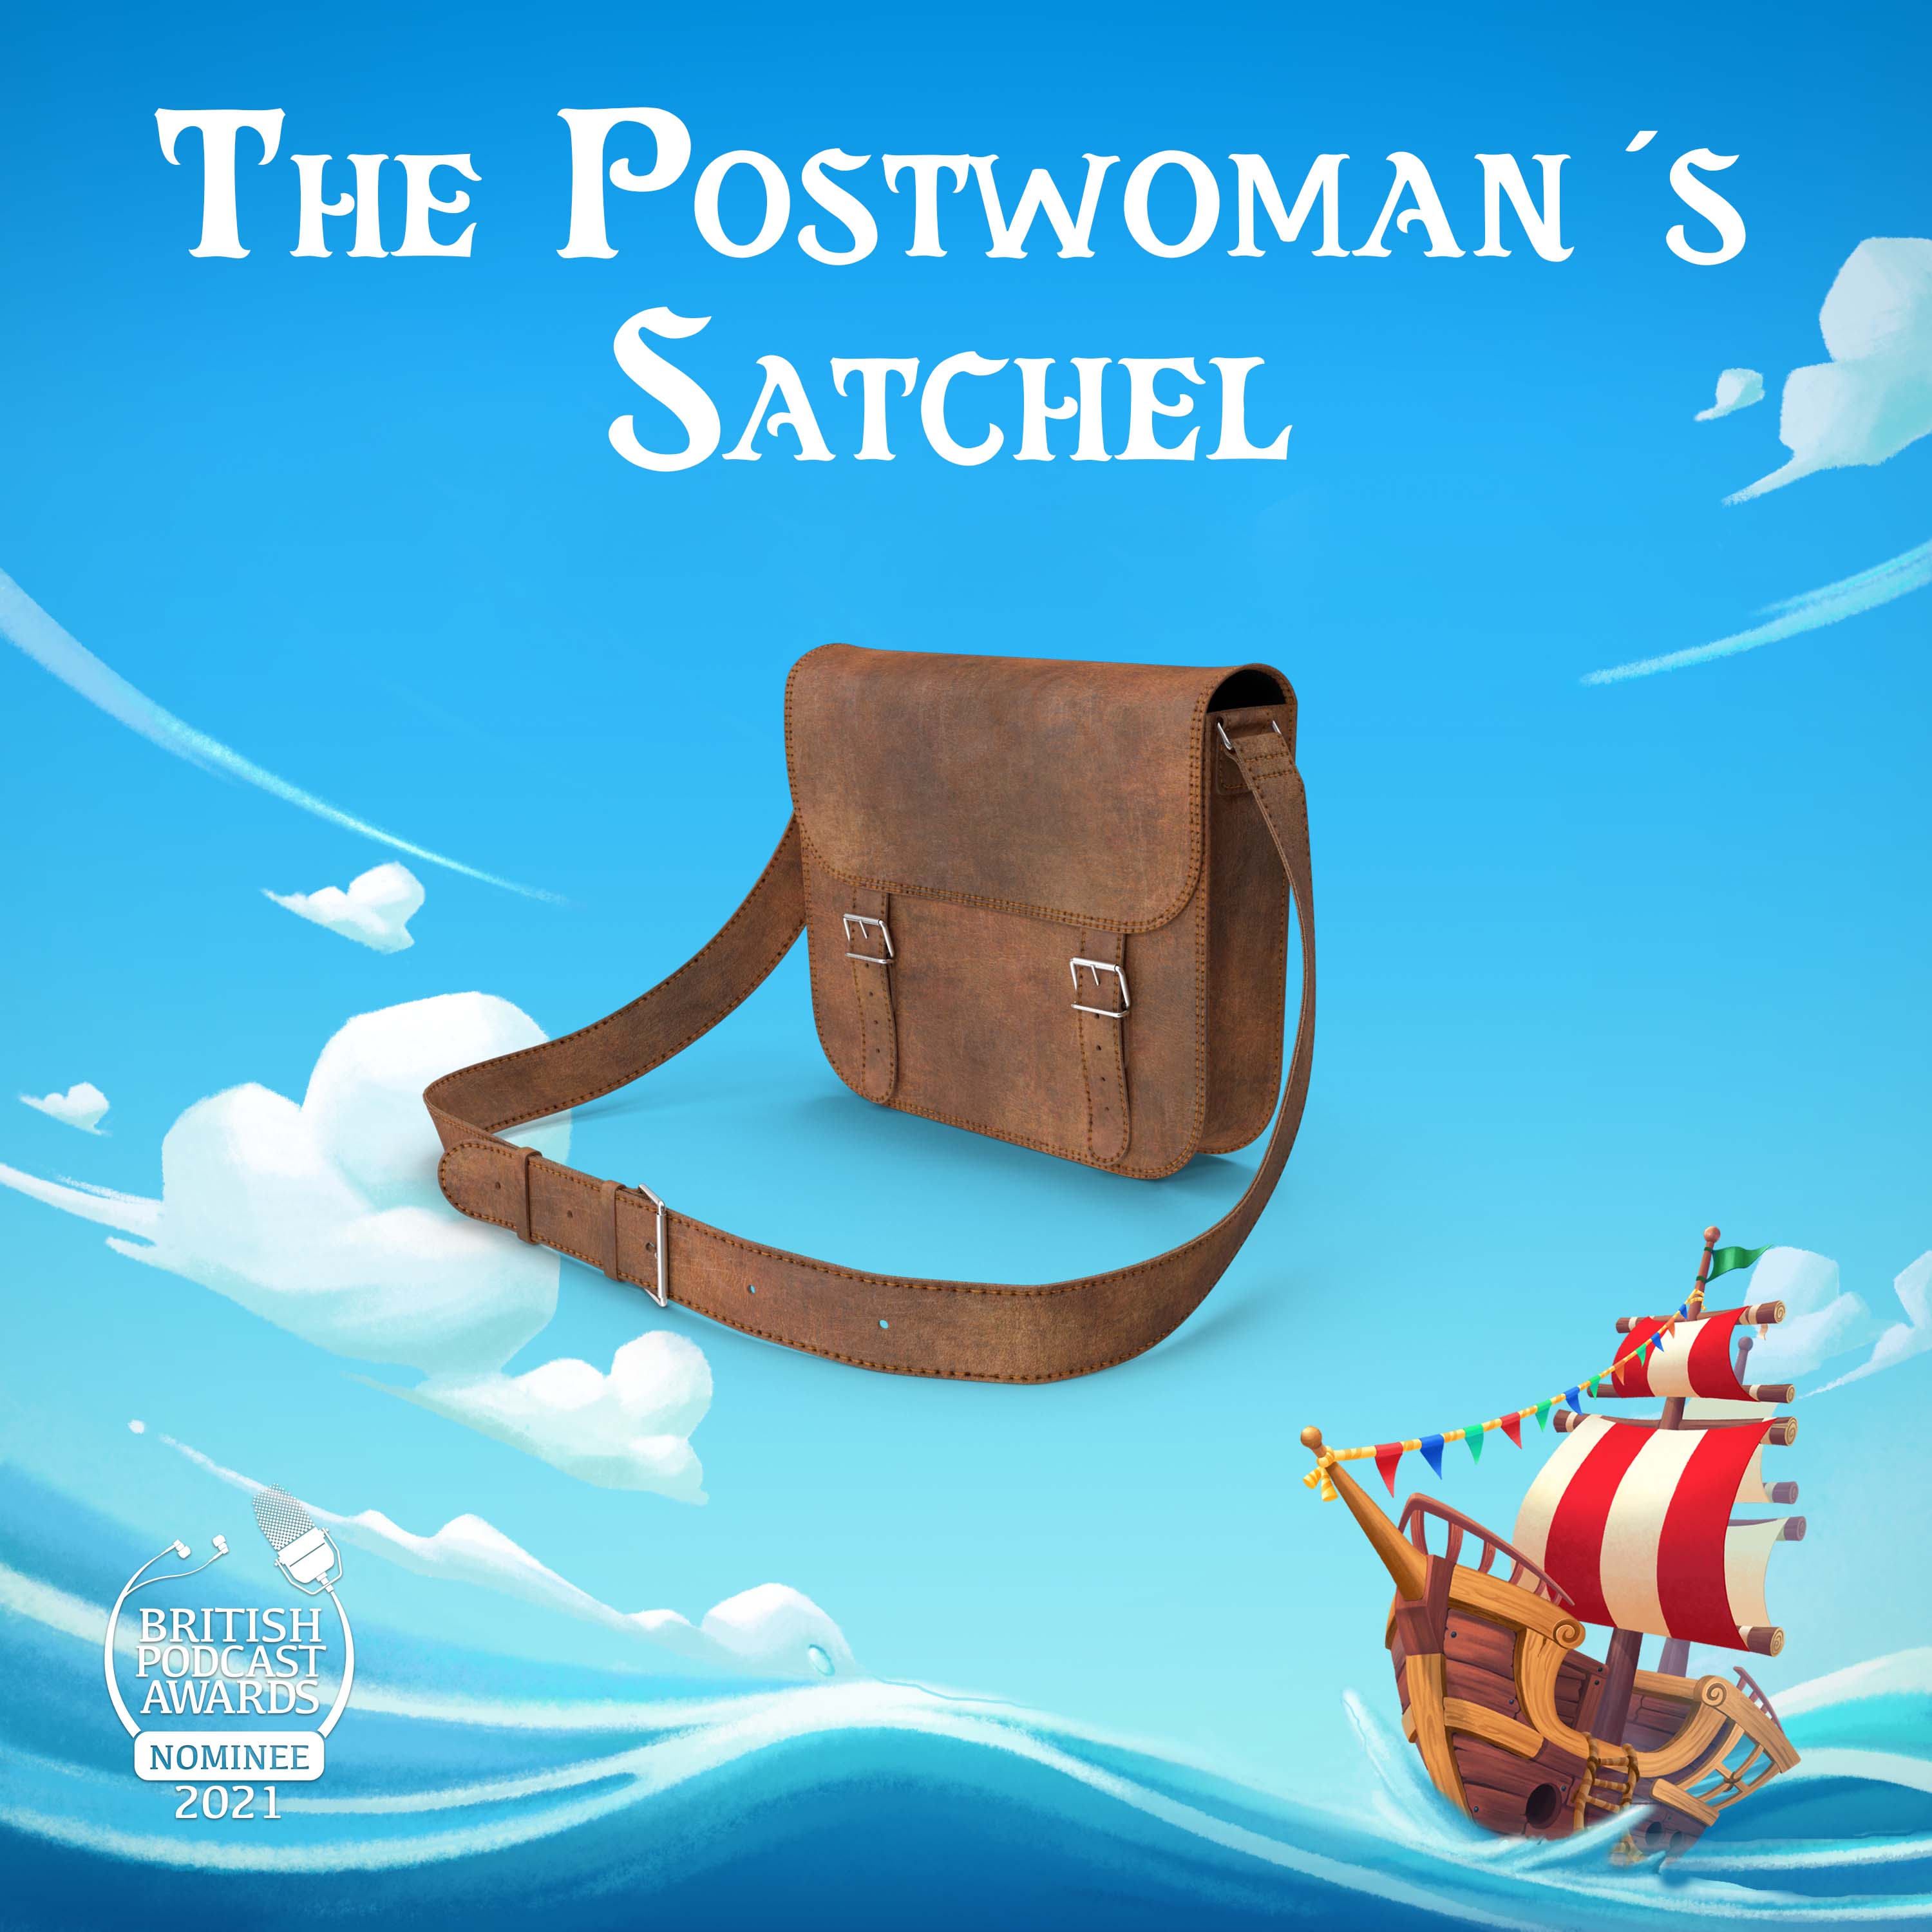 The Postwoman's Satchel